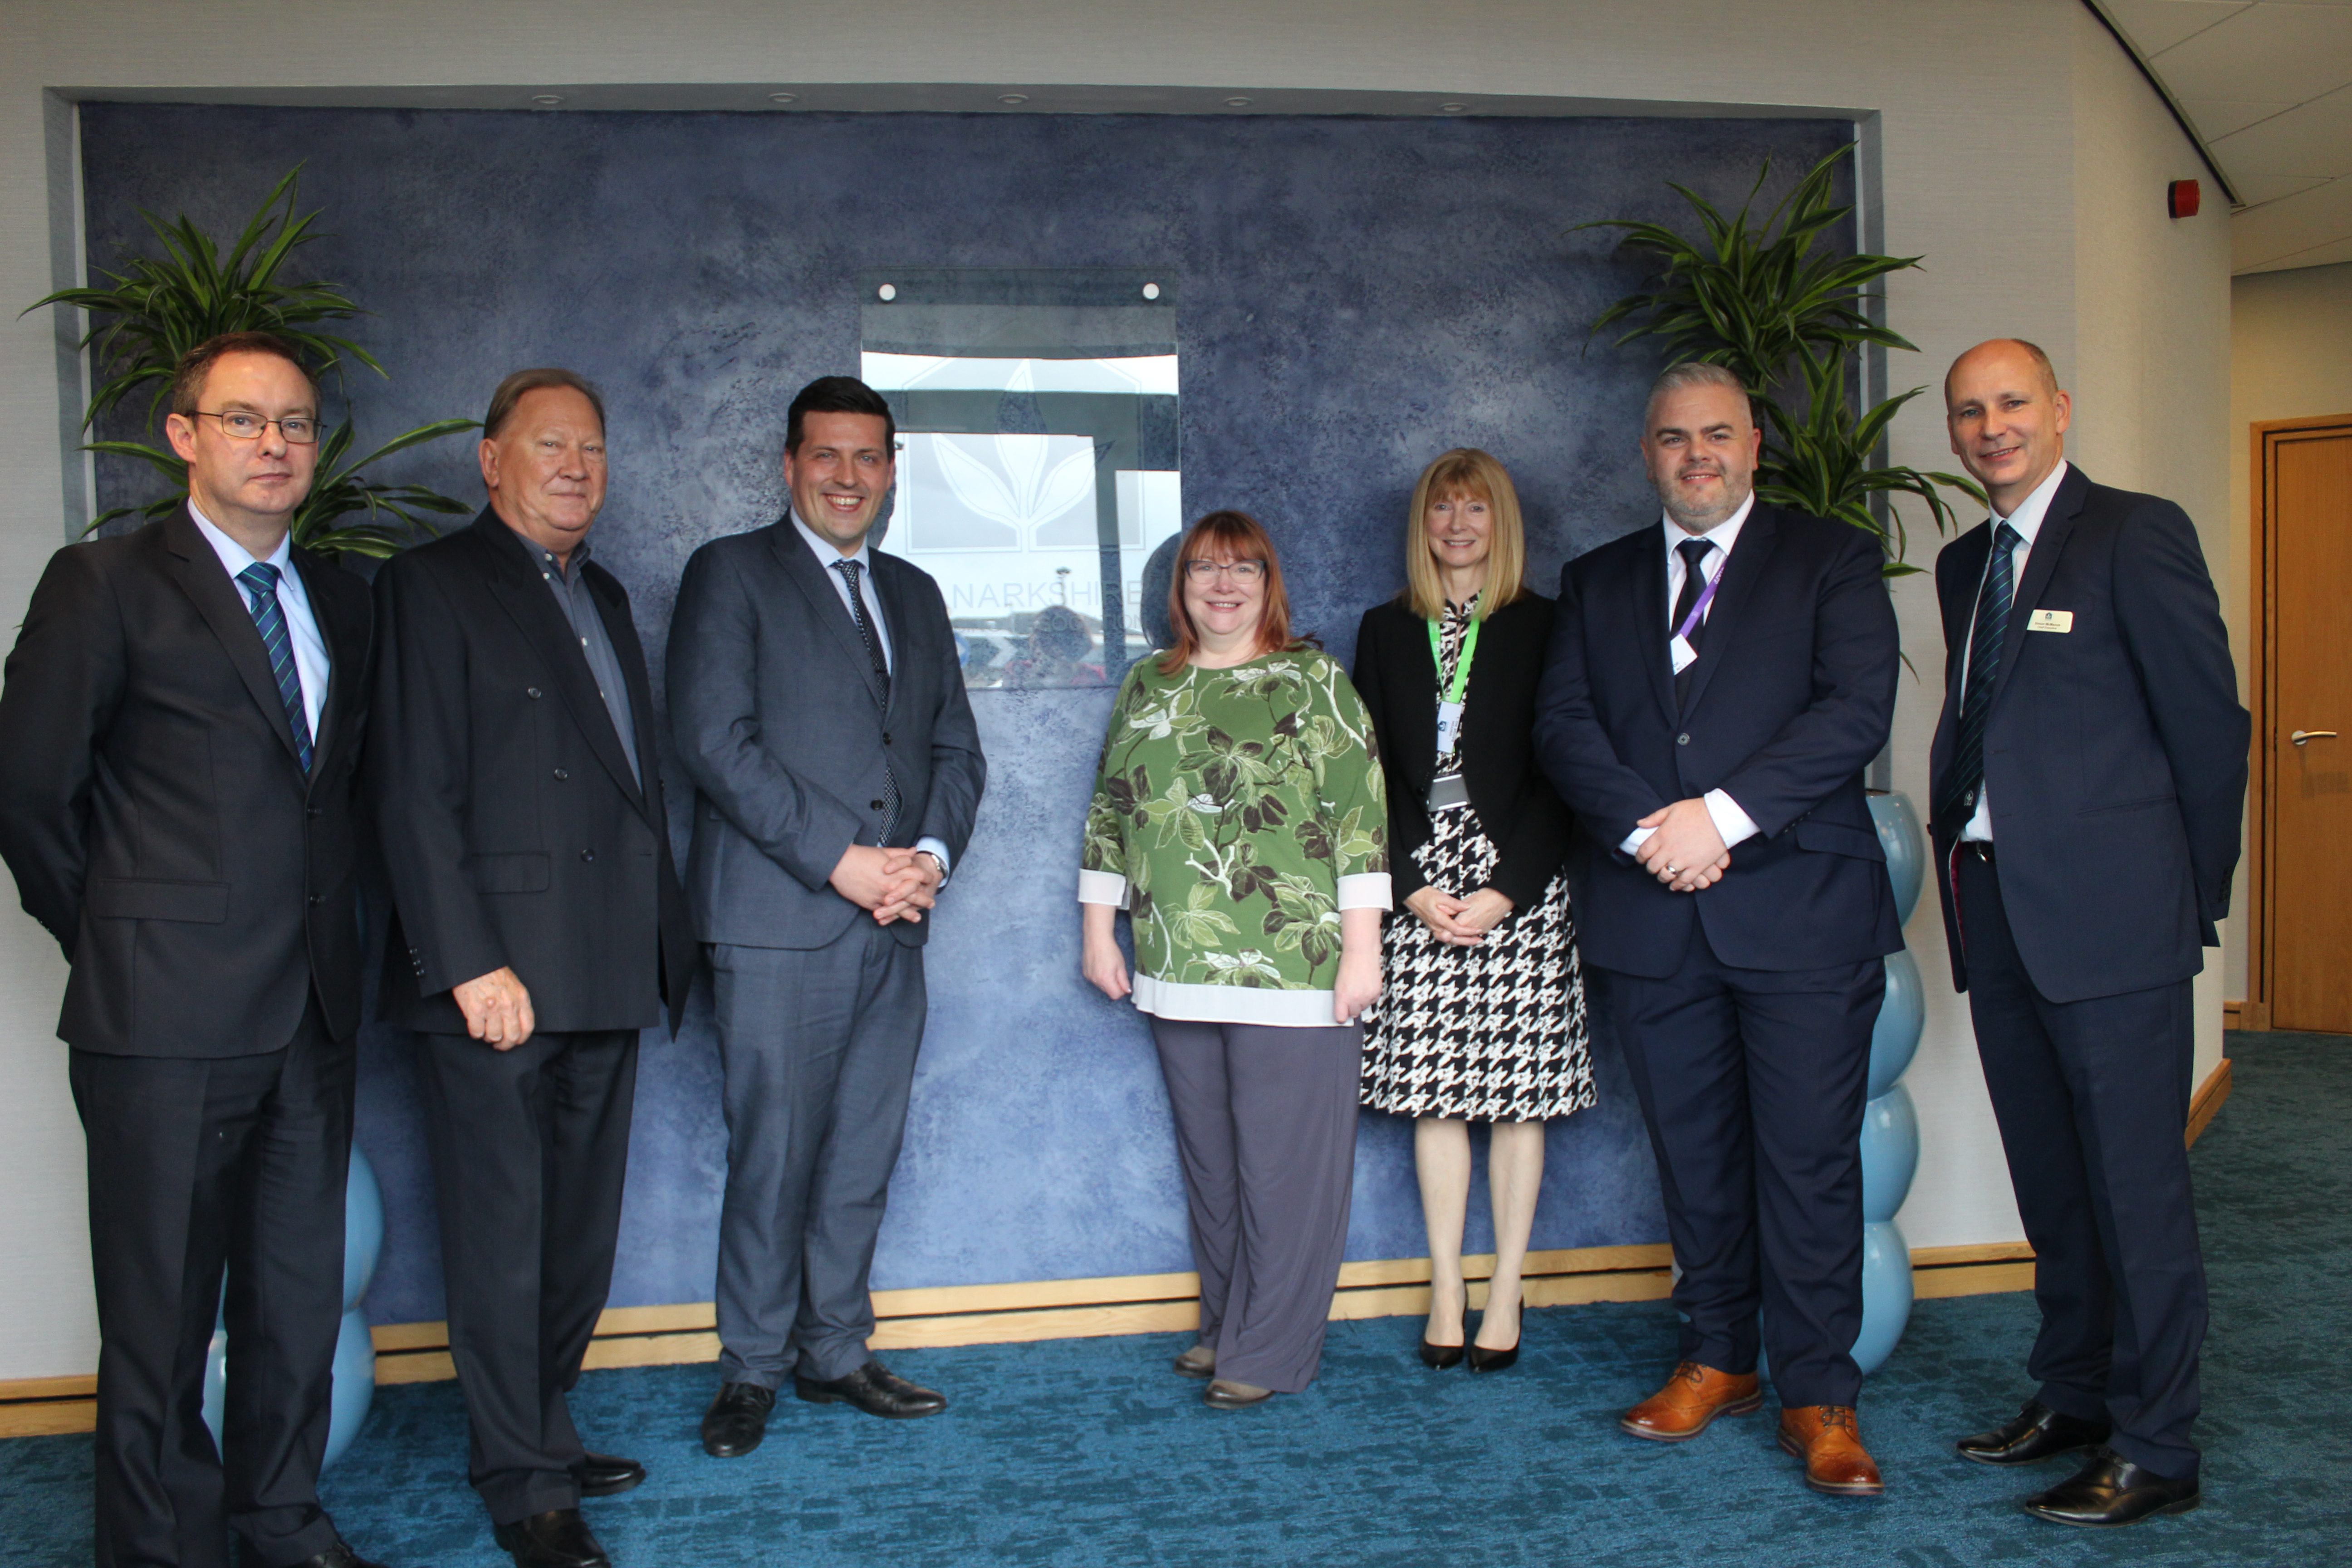 Minister visits Lanarkshire Housing Association to launch apprenticeships sponsorship scheme